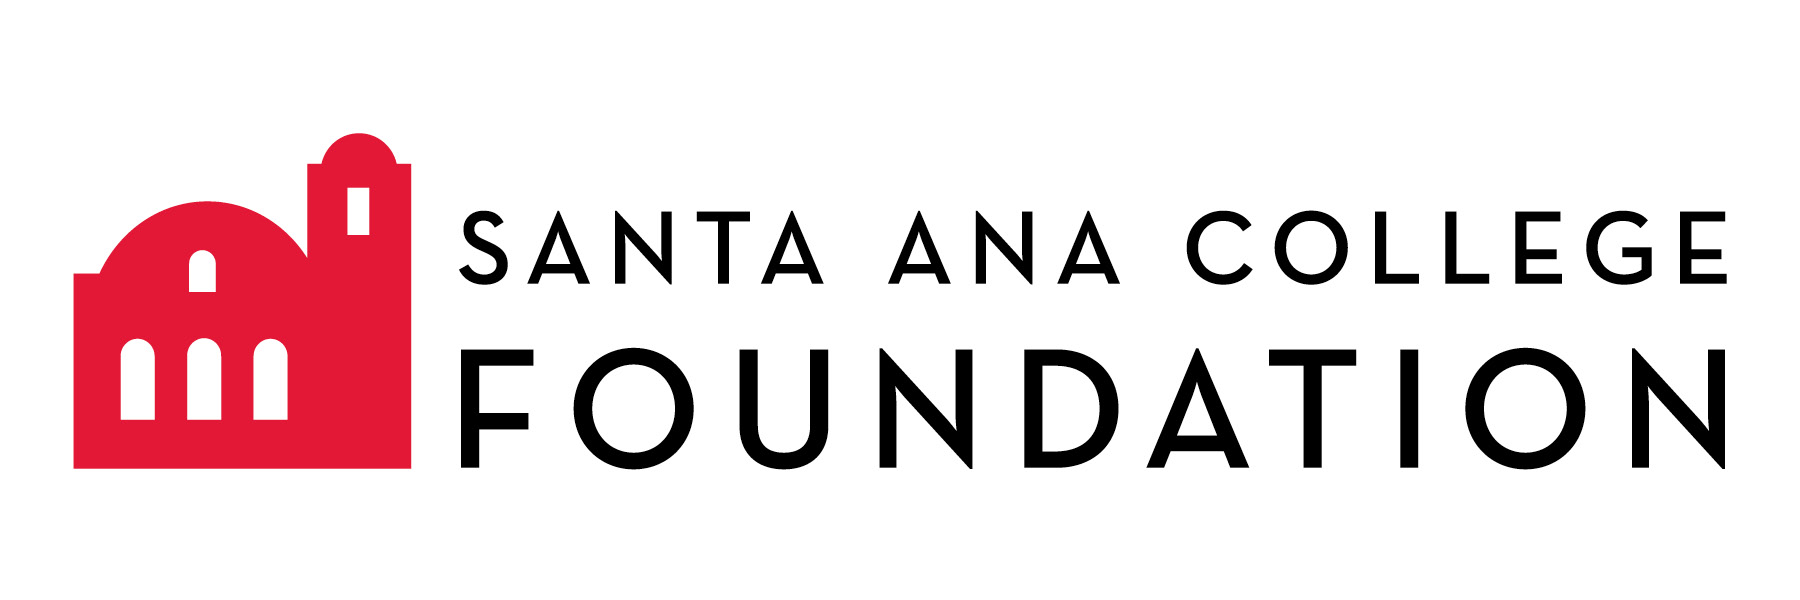 Santa Ana COllege Foundation logo